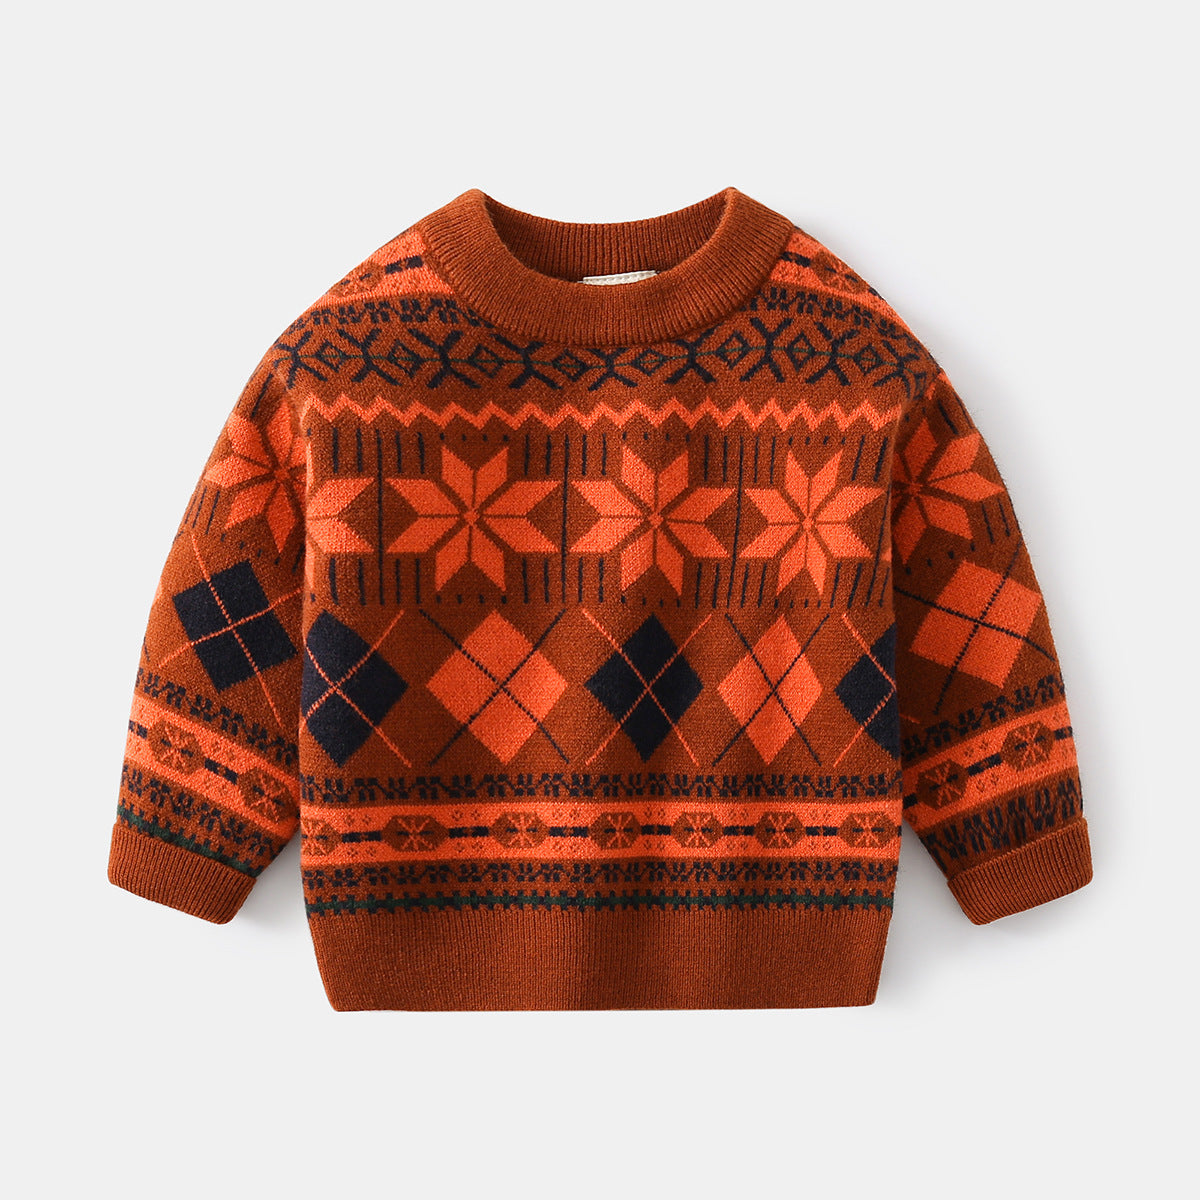 [513586] - Atasan Sweater Rajut Lengan Panjang Anak Cowok Cewek - Motif Abstract Geometry ko